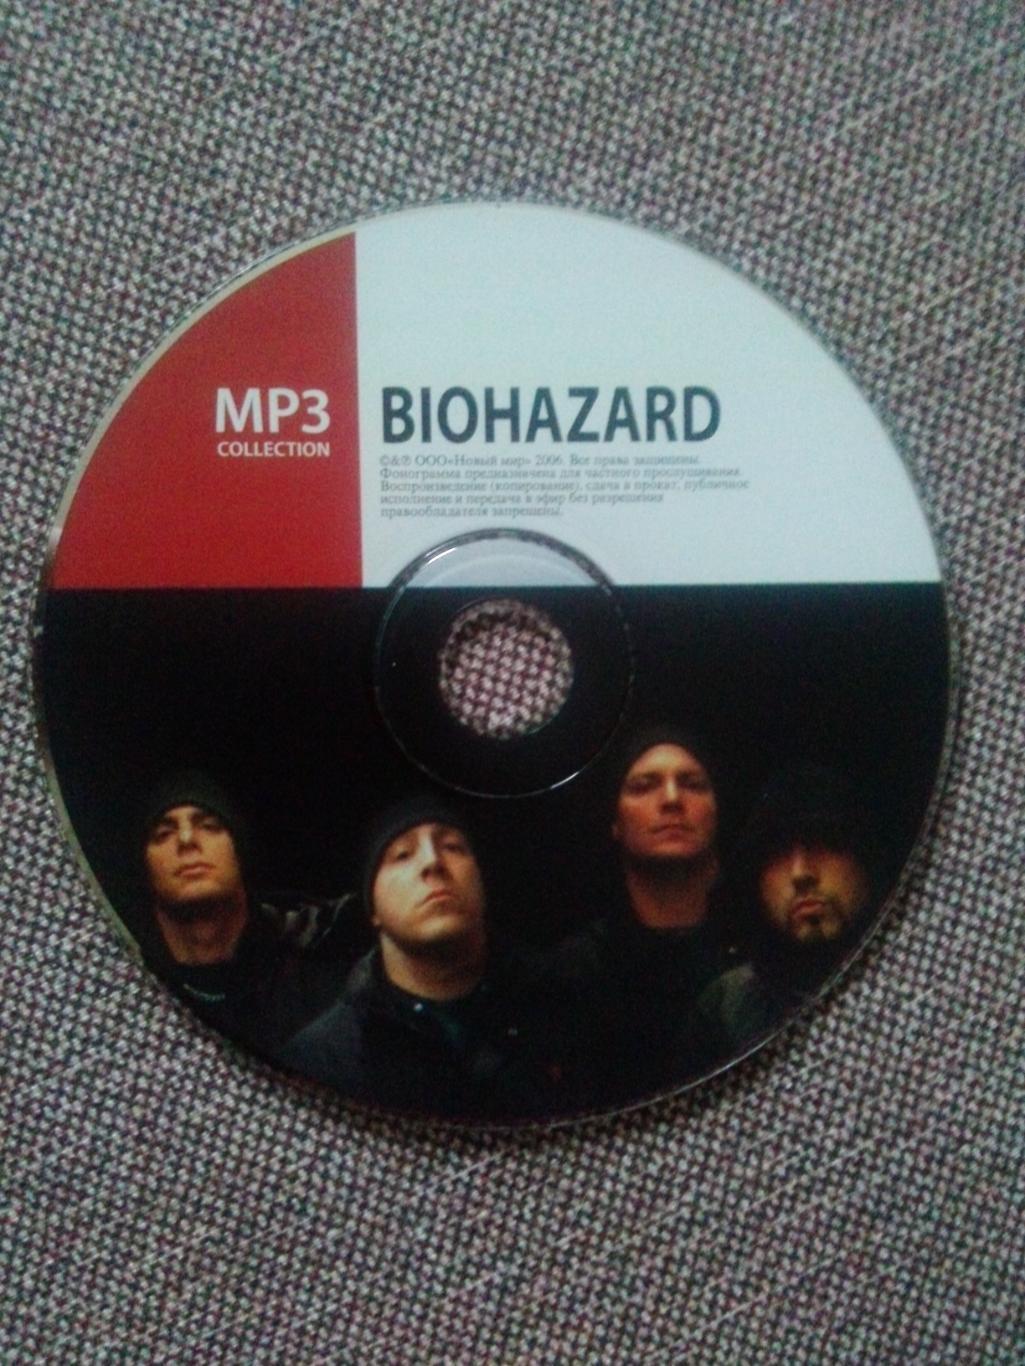 MP - 3 CD диск : группаBiohazard1990 - 2005 гг. 10 альбомов Thrash metal 2